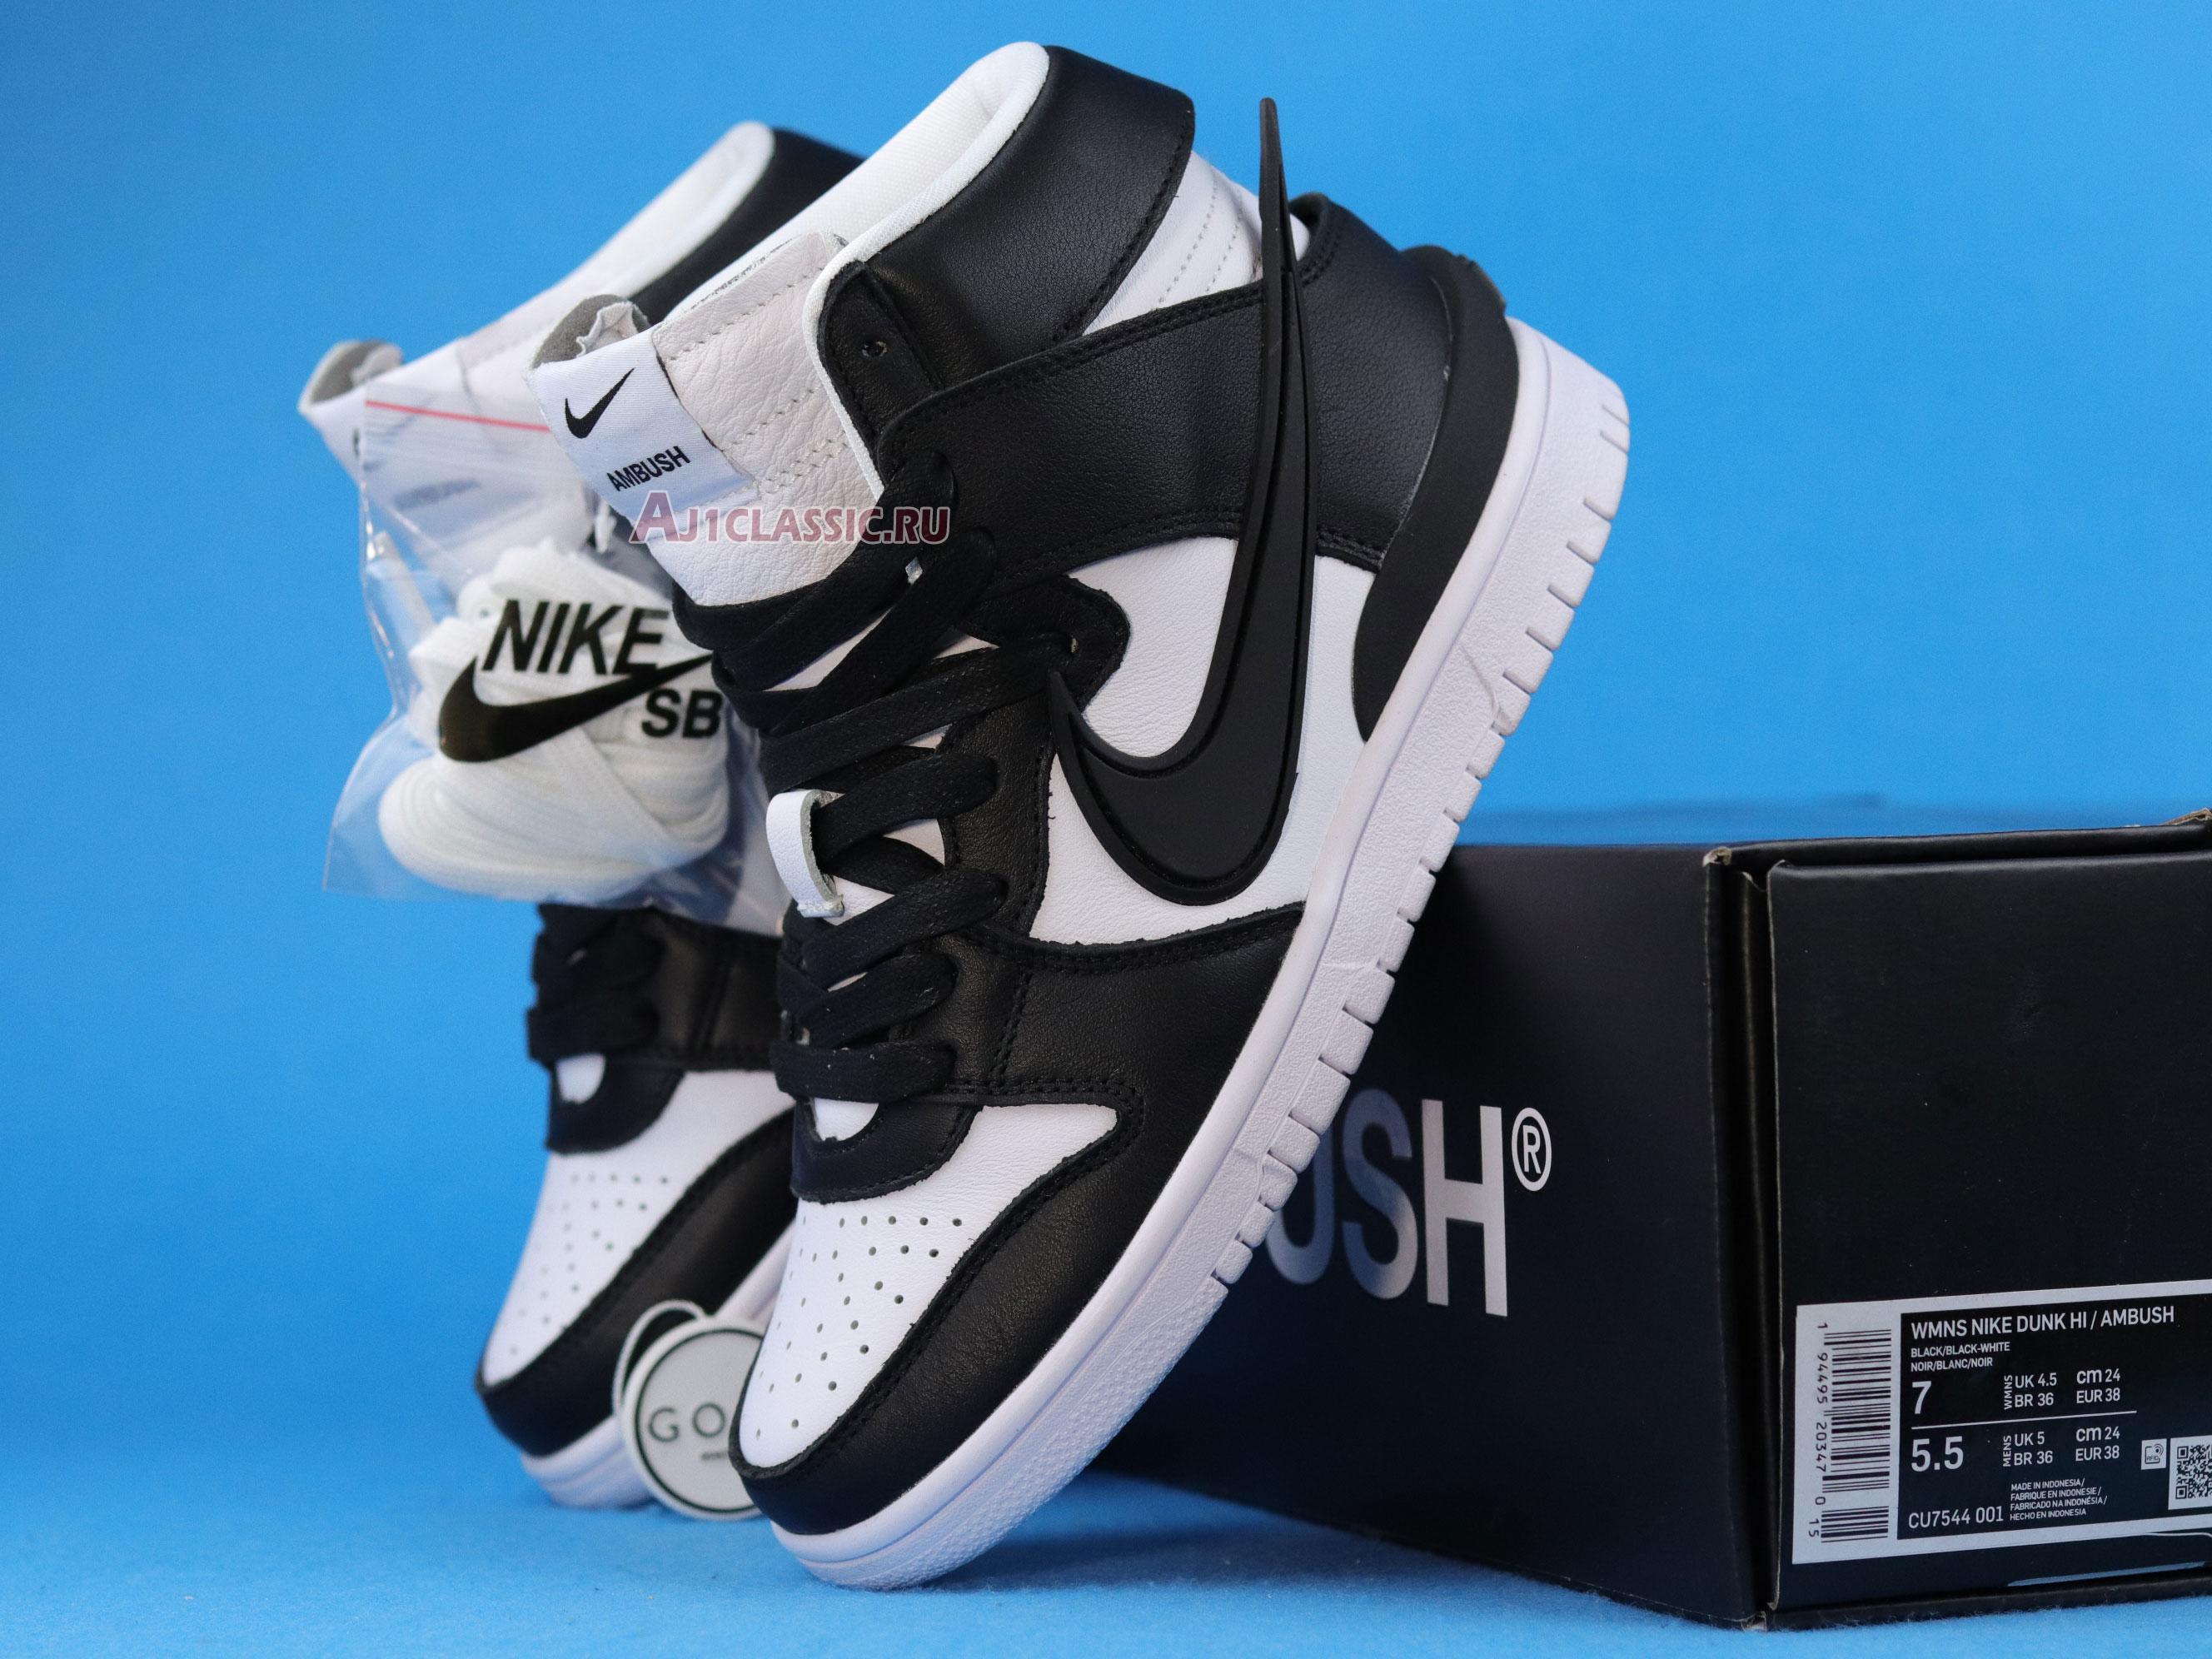 AMBUSH x Nike Dunk High "Black" CU7544-001